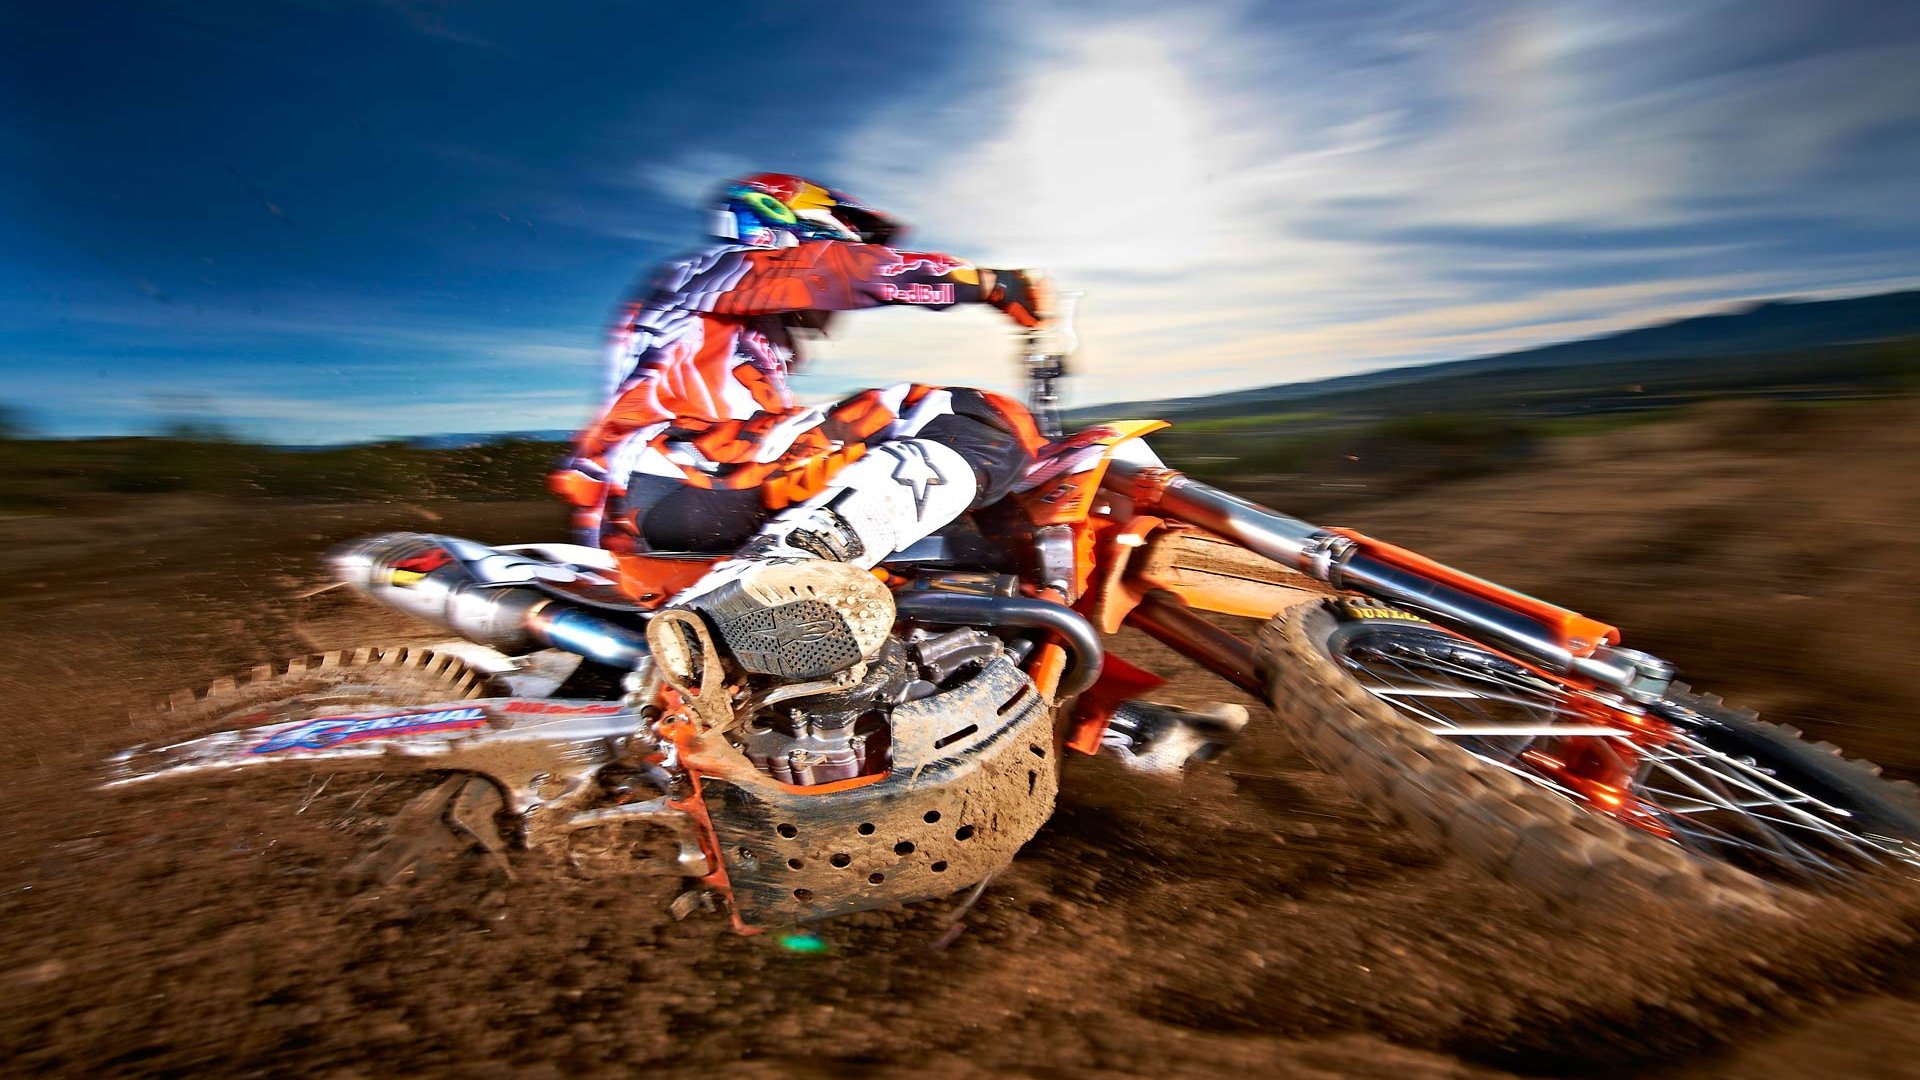 Motocross Wallpaper for PC | Full HD Pictures